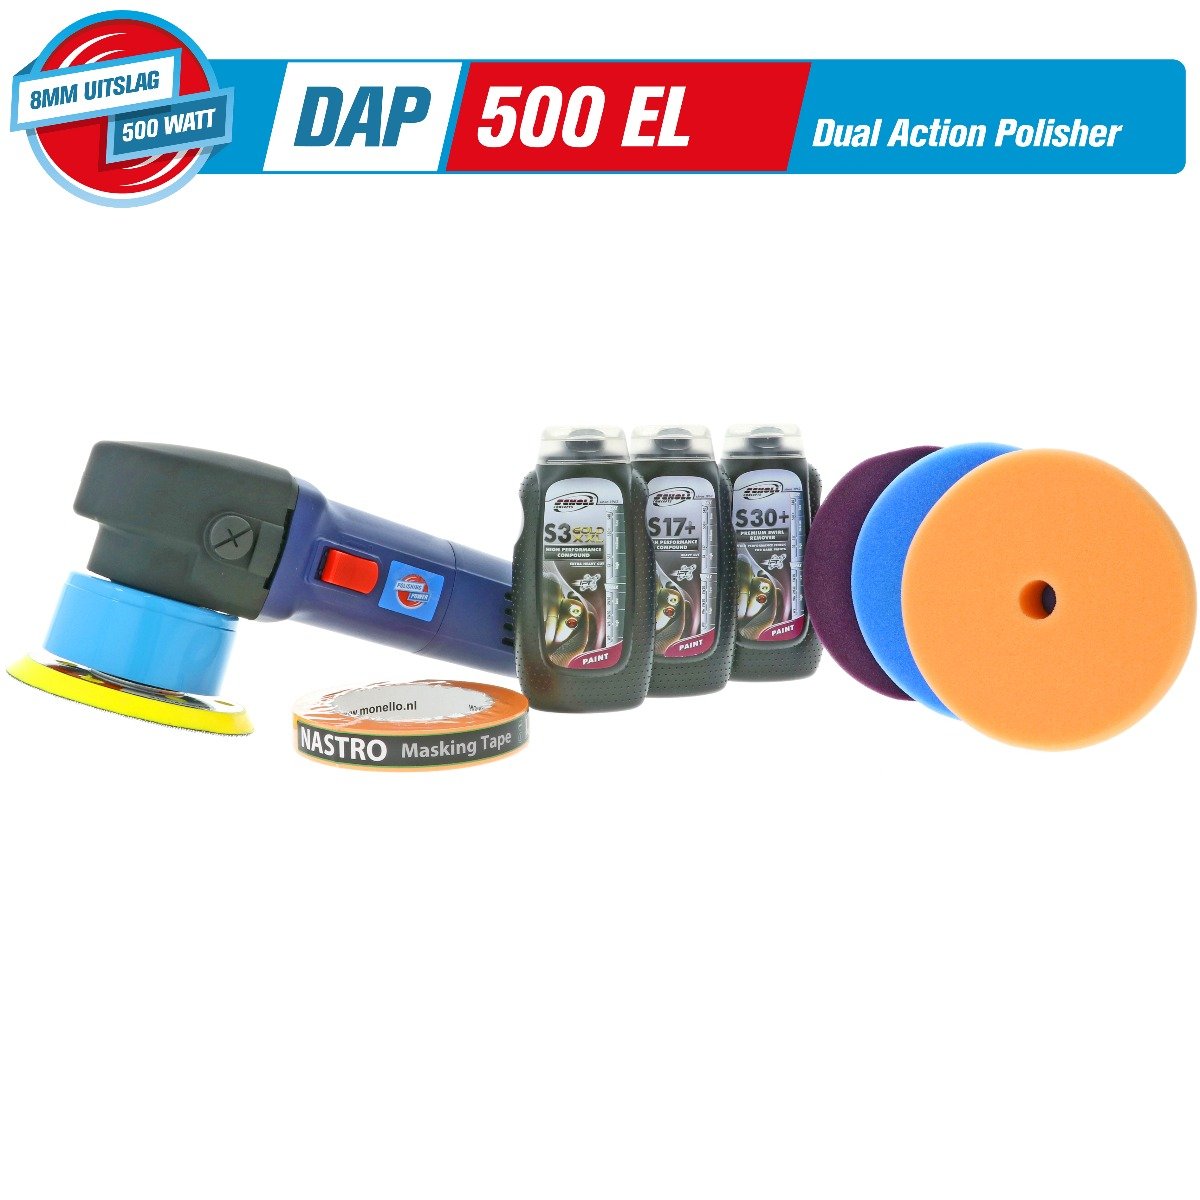 DAP500 EL Scholl Concepts Starterskit